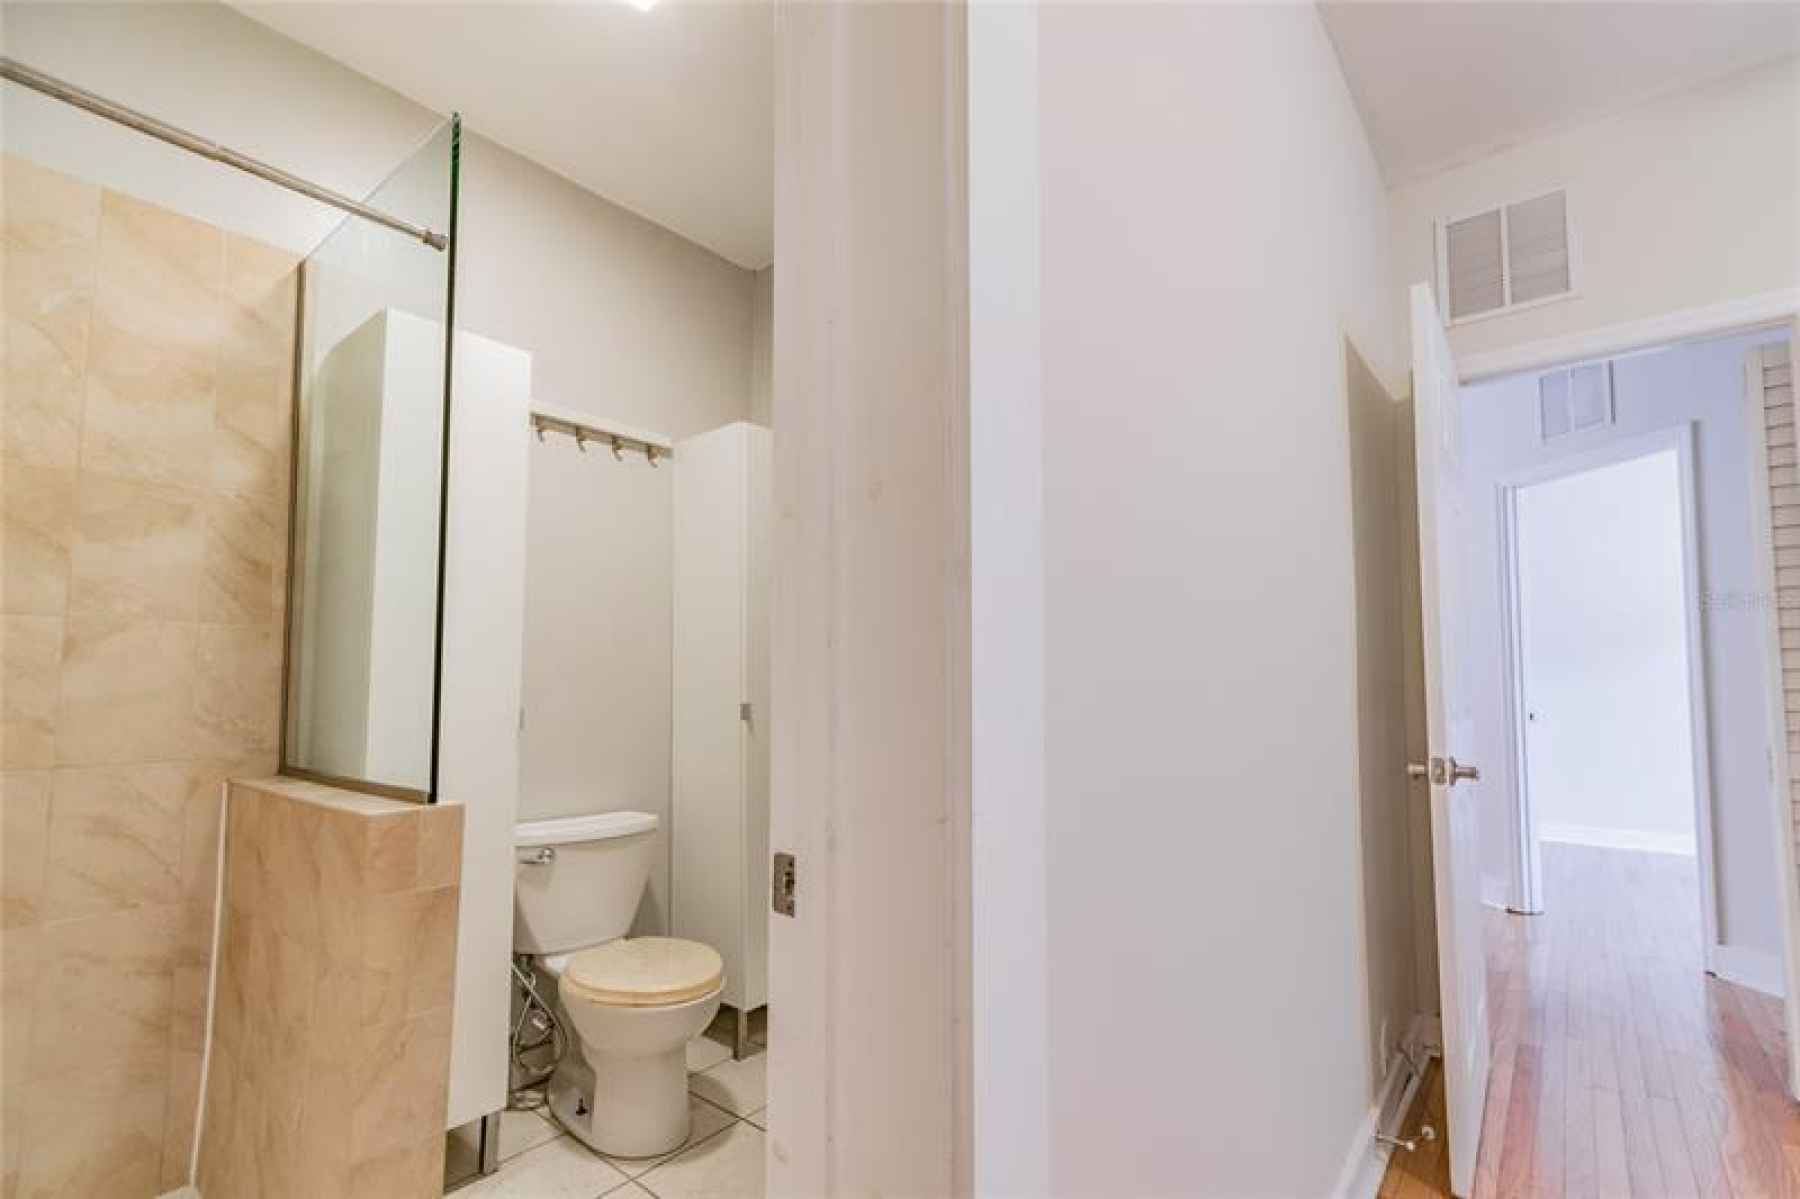 Owner's suite with en-suite bathroom